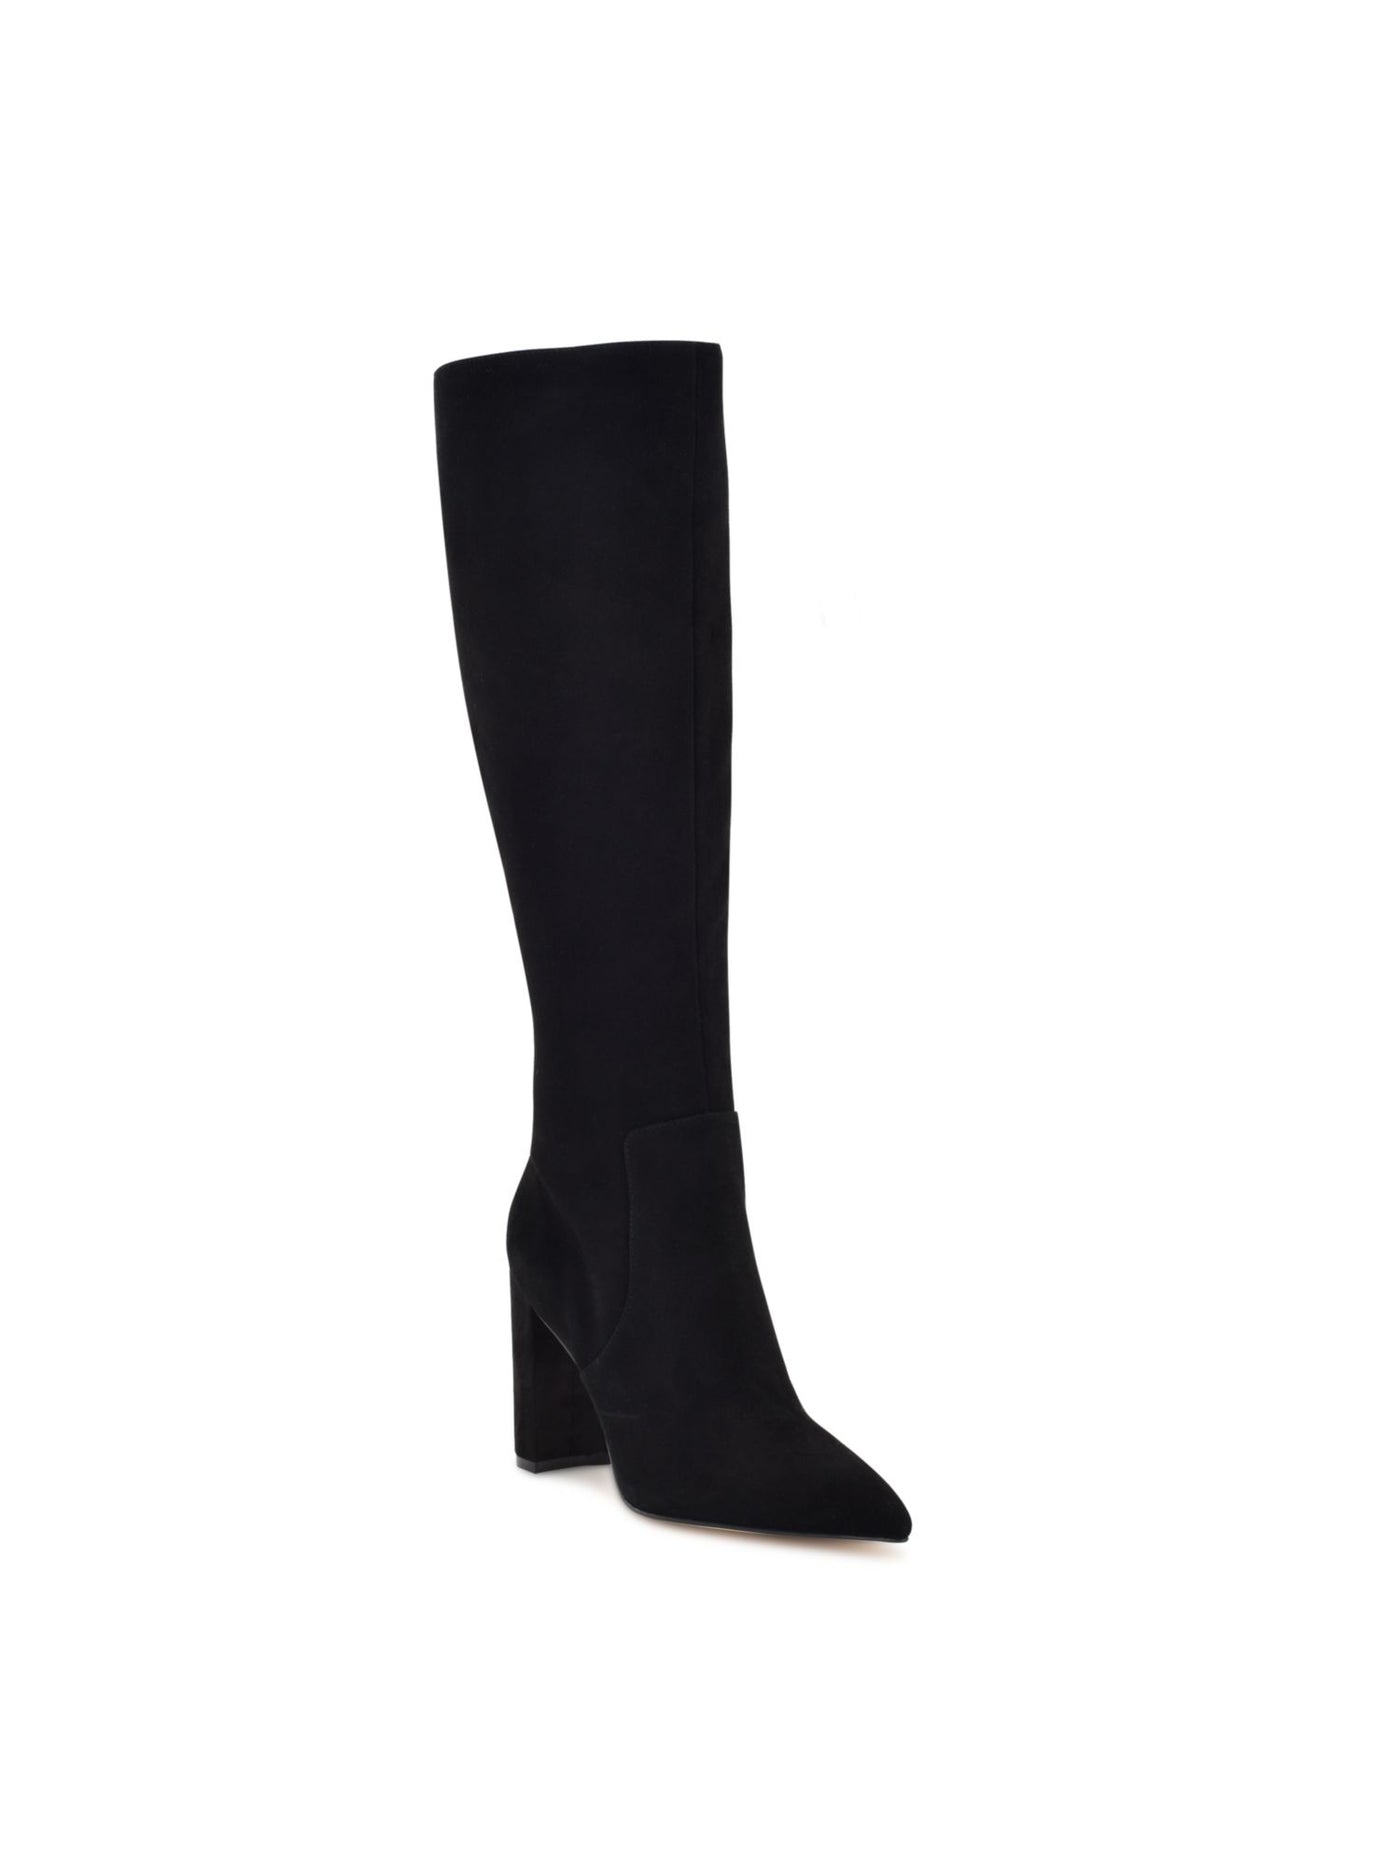 NINE WEST Womens Black Goring Padded Danee Pointed Toe Block Heel Zip-Up Leather Dress Boots 7.5 M